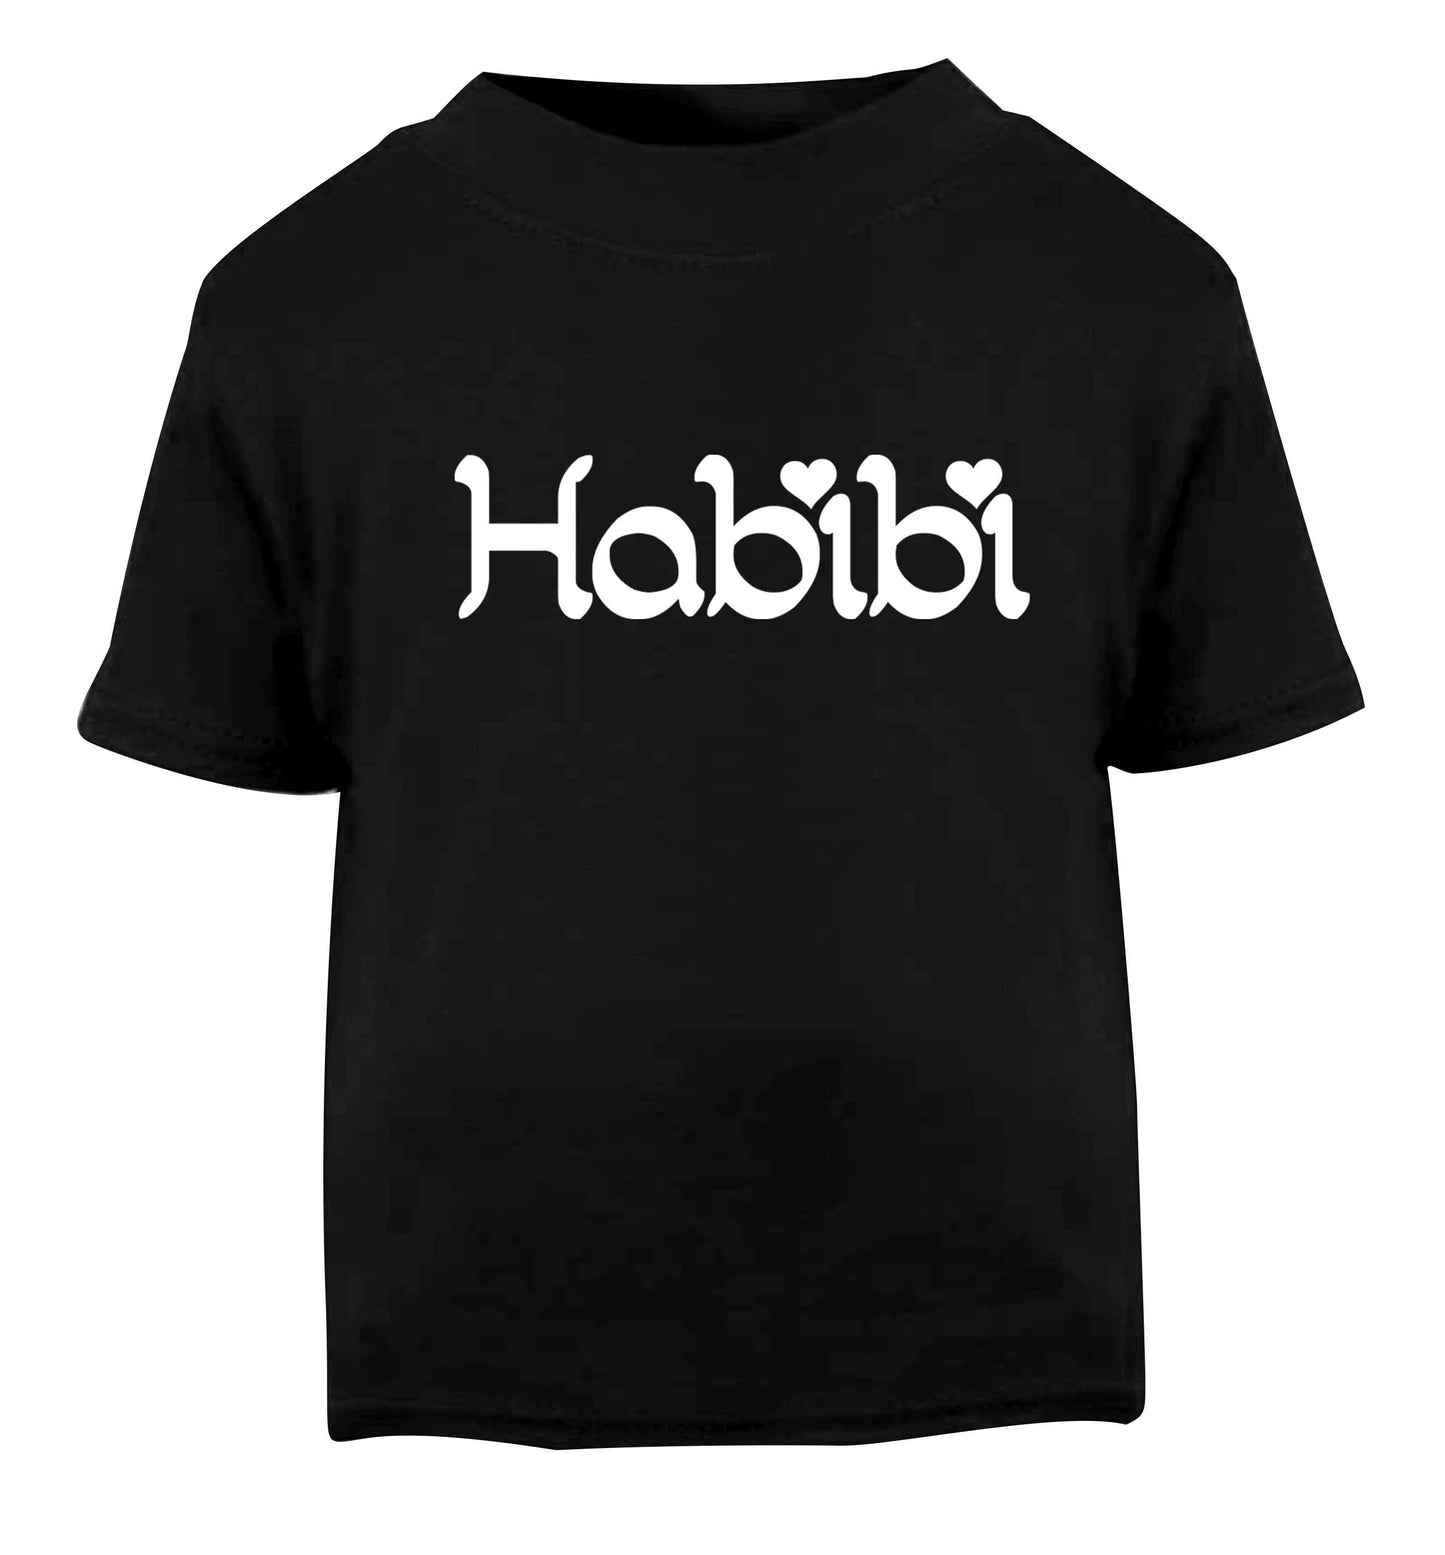 Habibi Black baby toddler Tshirt 2 years